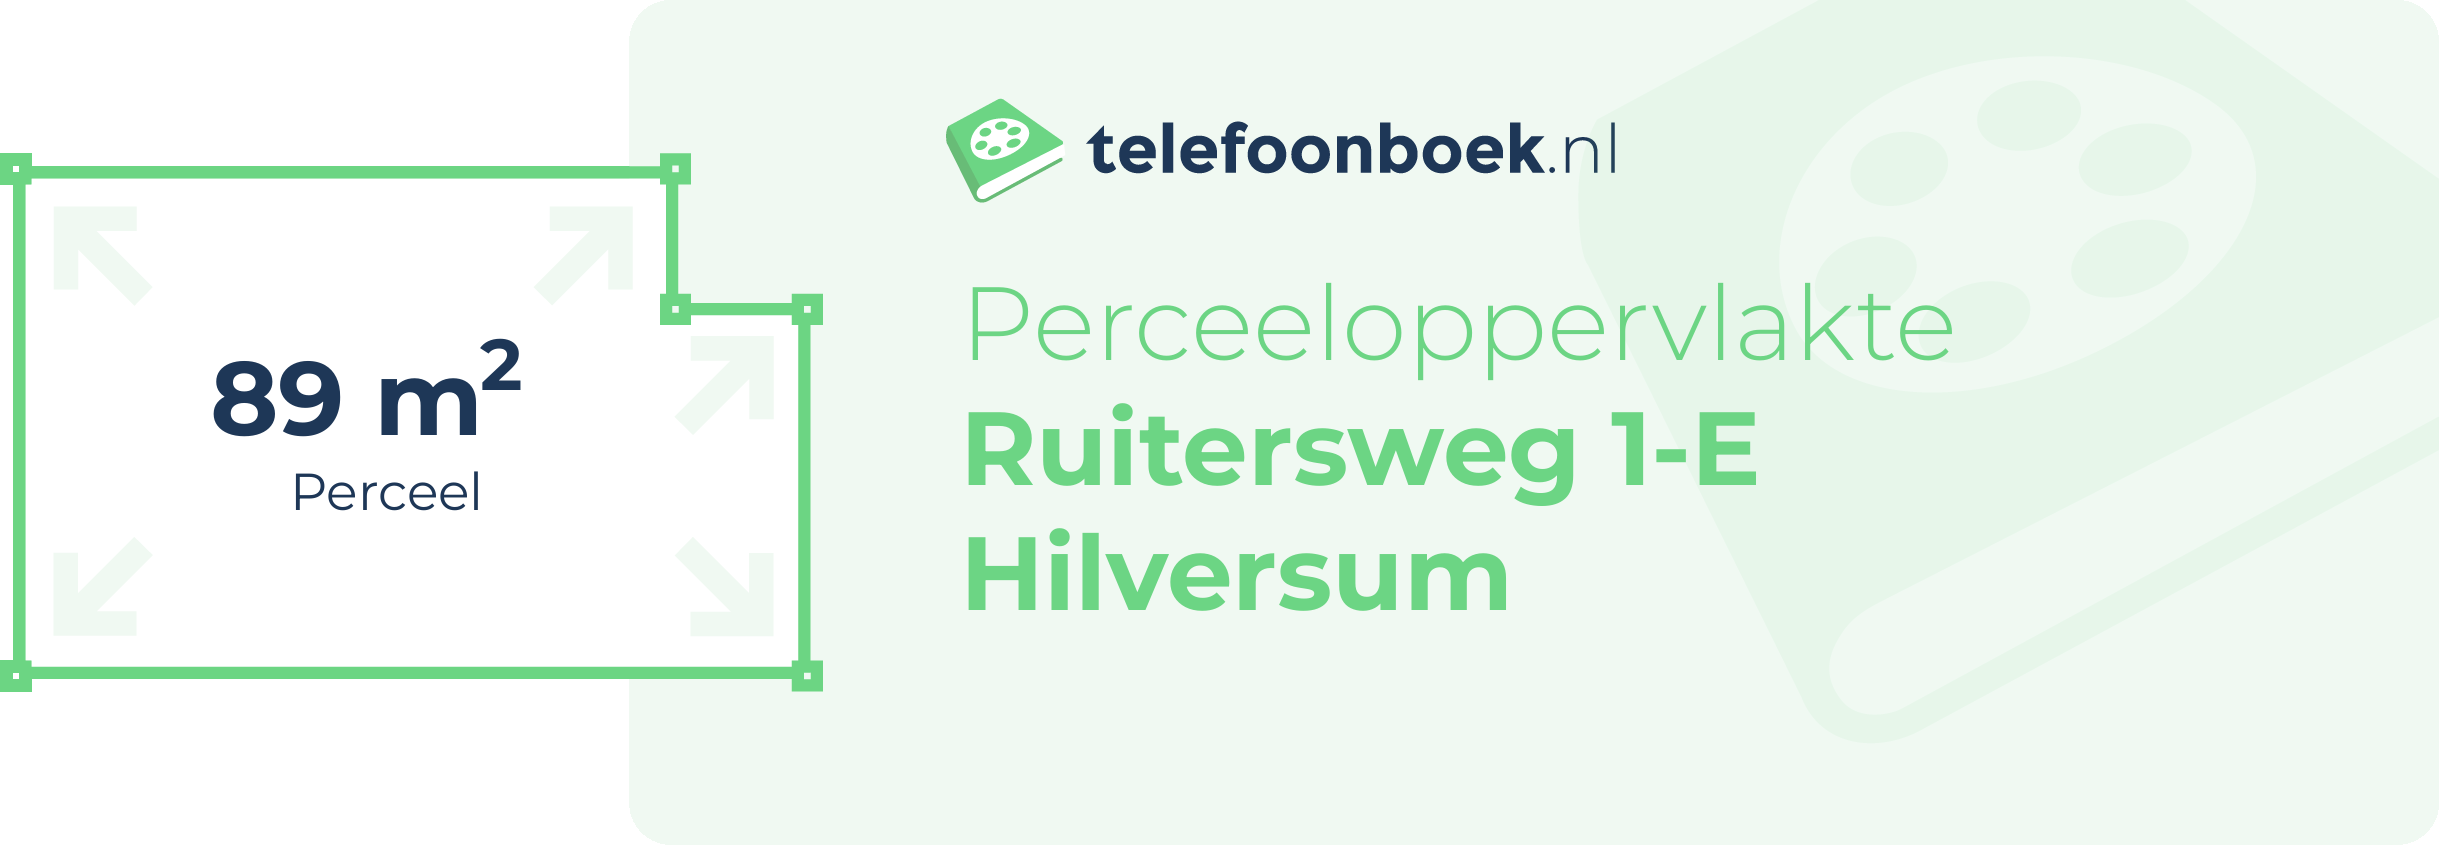 Perceeloppervlakte Ruitersweg 1-E Hilversum